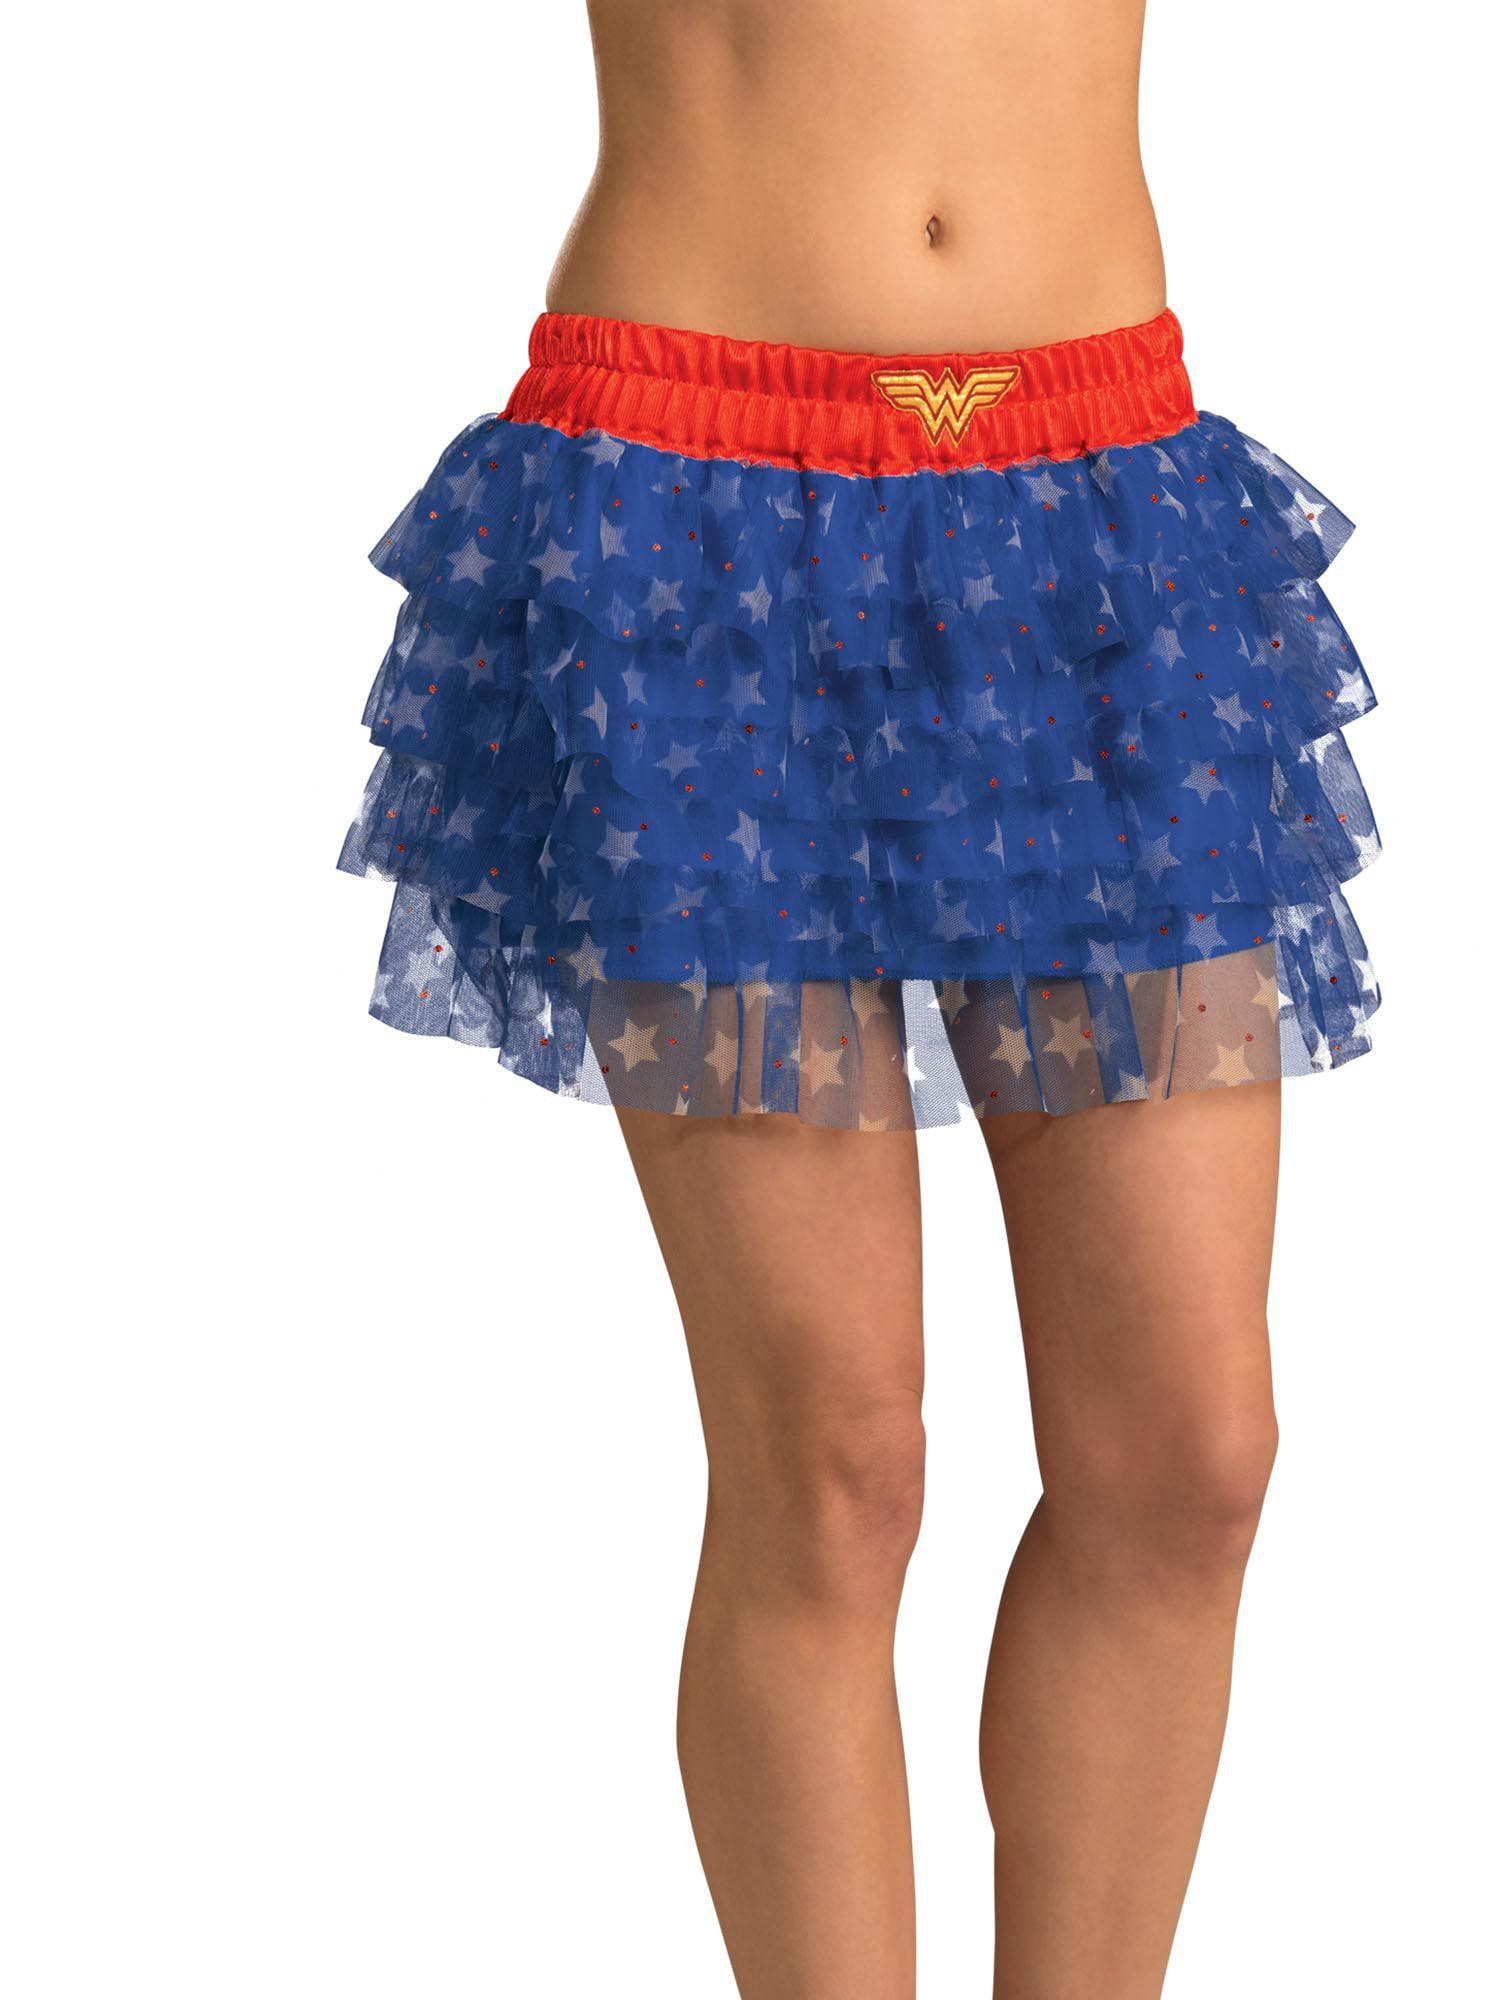 Adult Justice League Wonder Woman Skirt - costumes.com